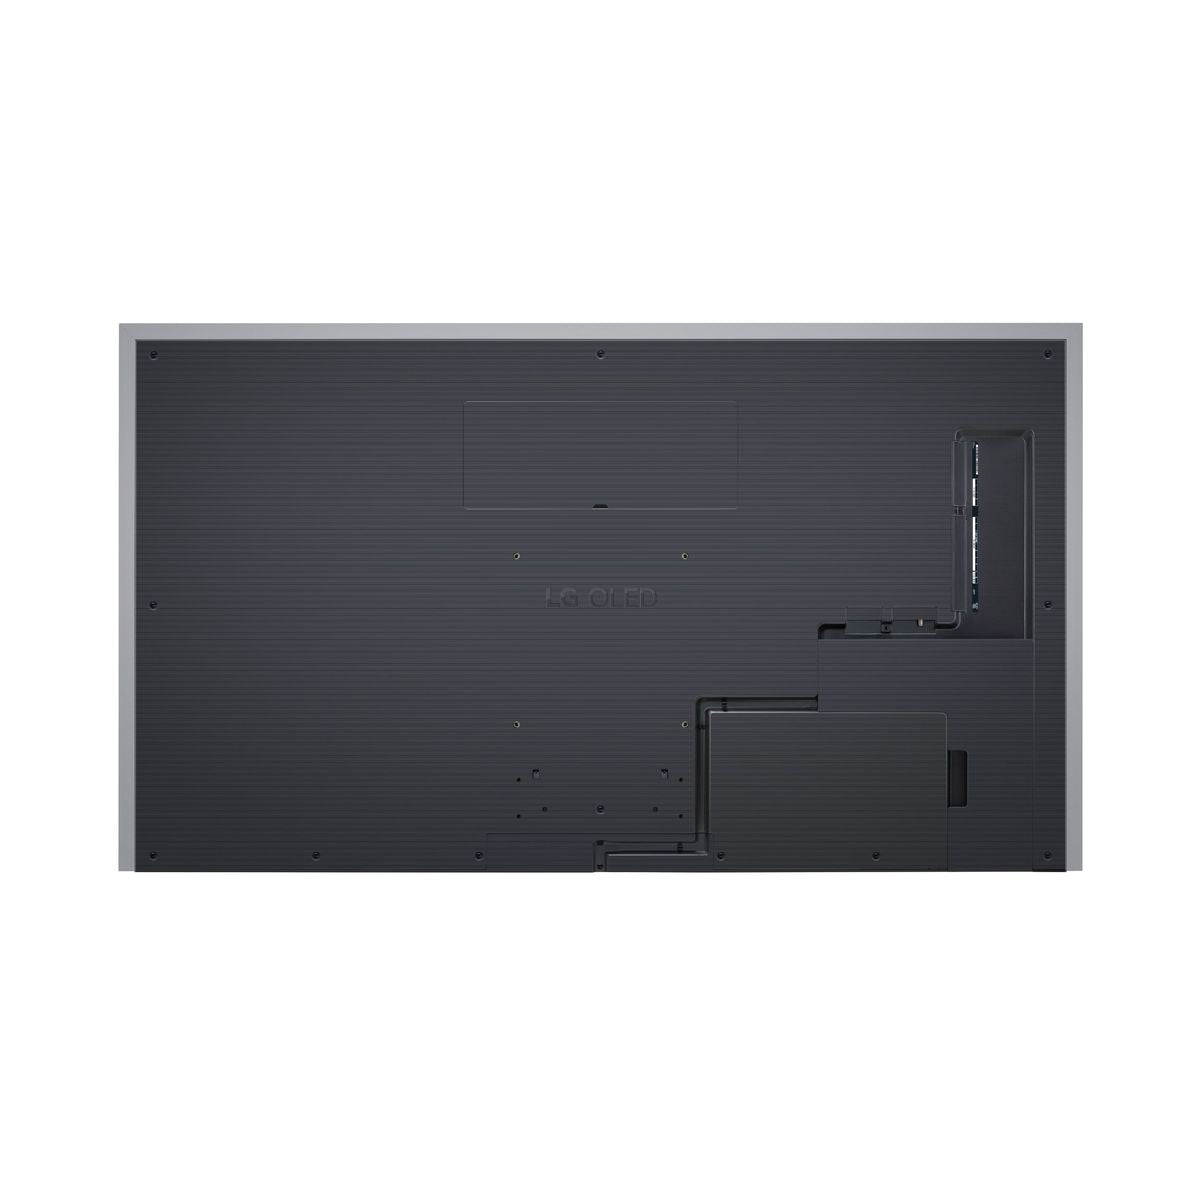 LG OLED83G45LW Gallery design OLED Smart televisie, met 300,= cashback via LG